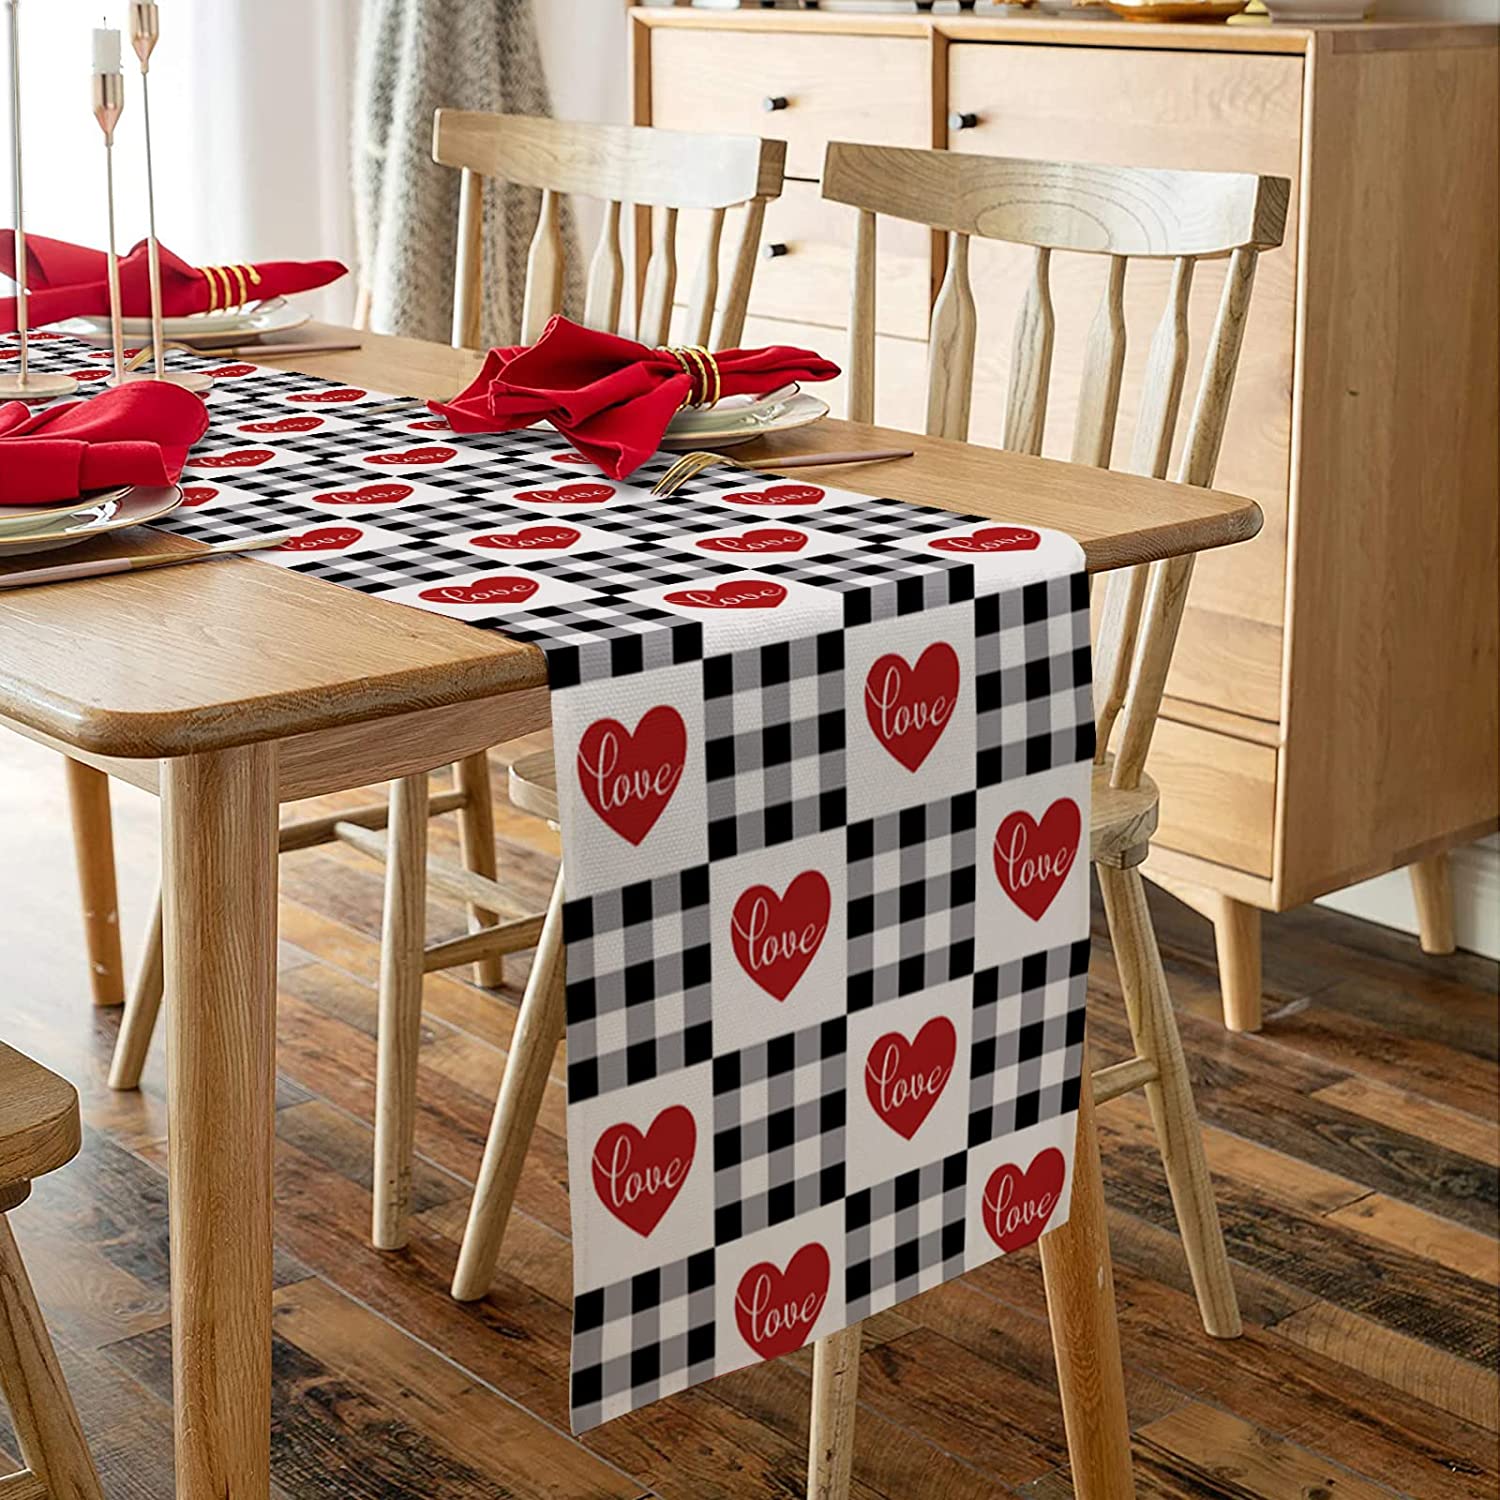 Black and White Lattice - Love Heart Table Runner For Valentine's Day